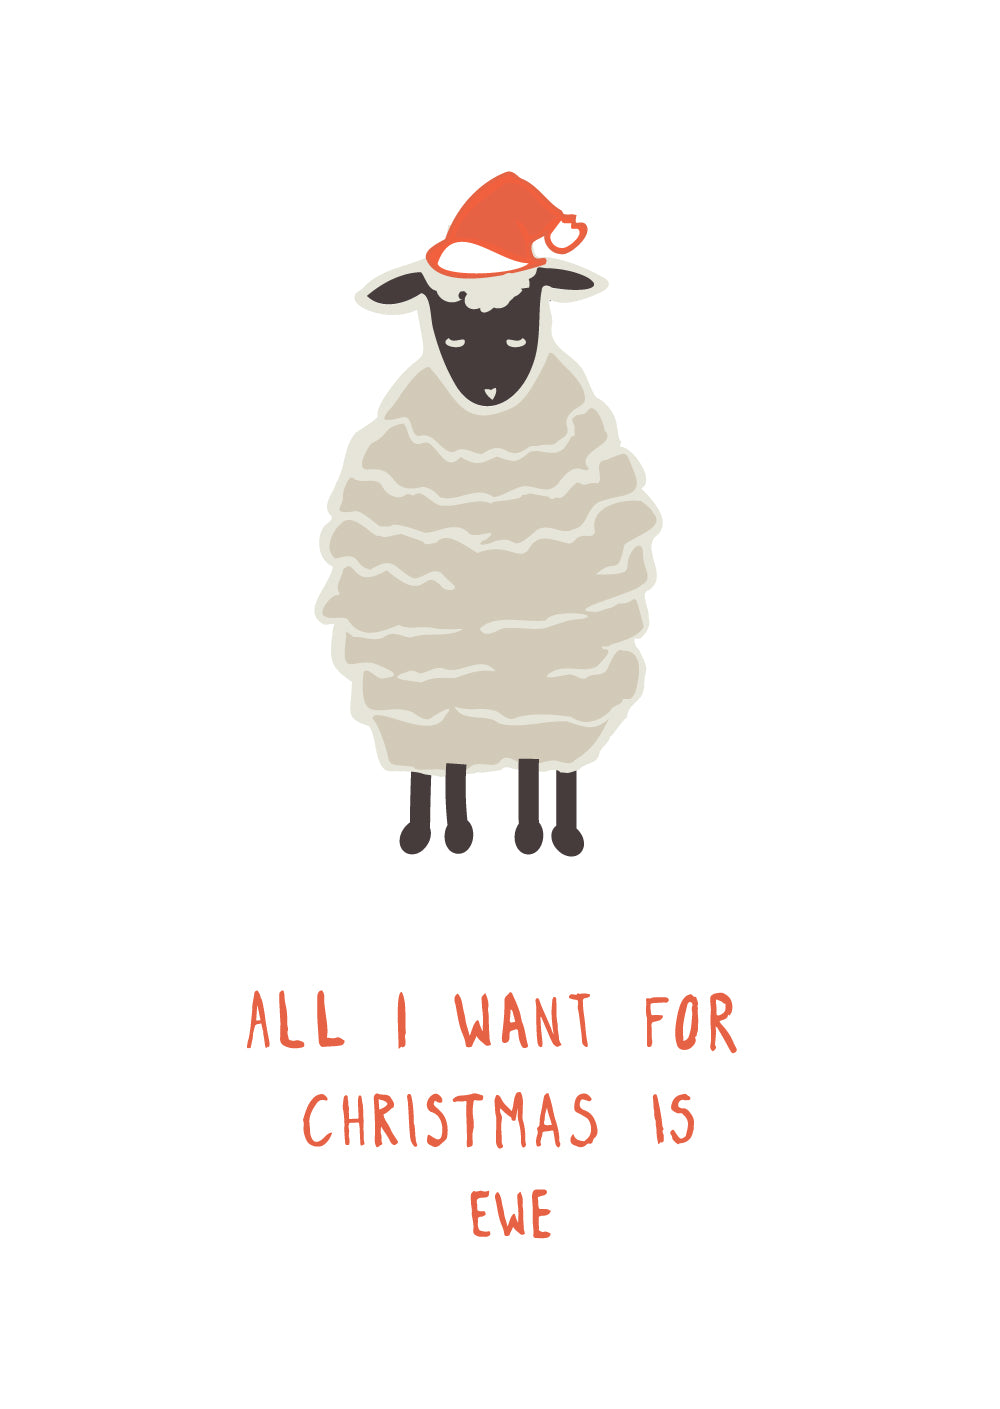 Sheep with Christmas santa hat on